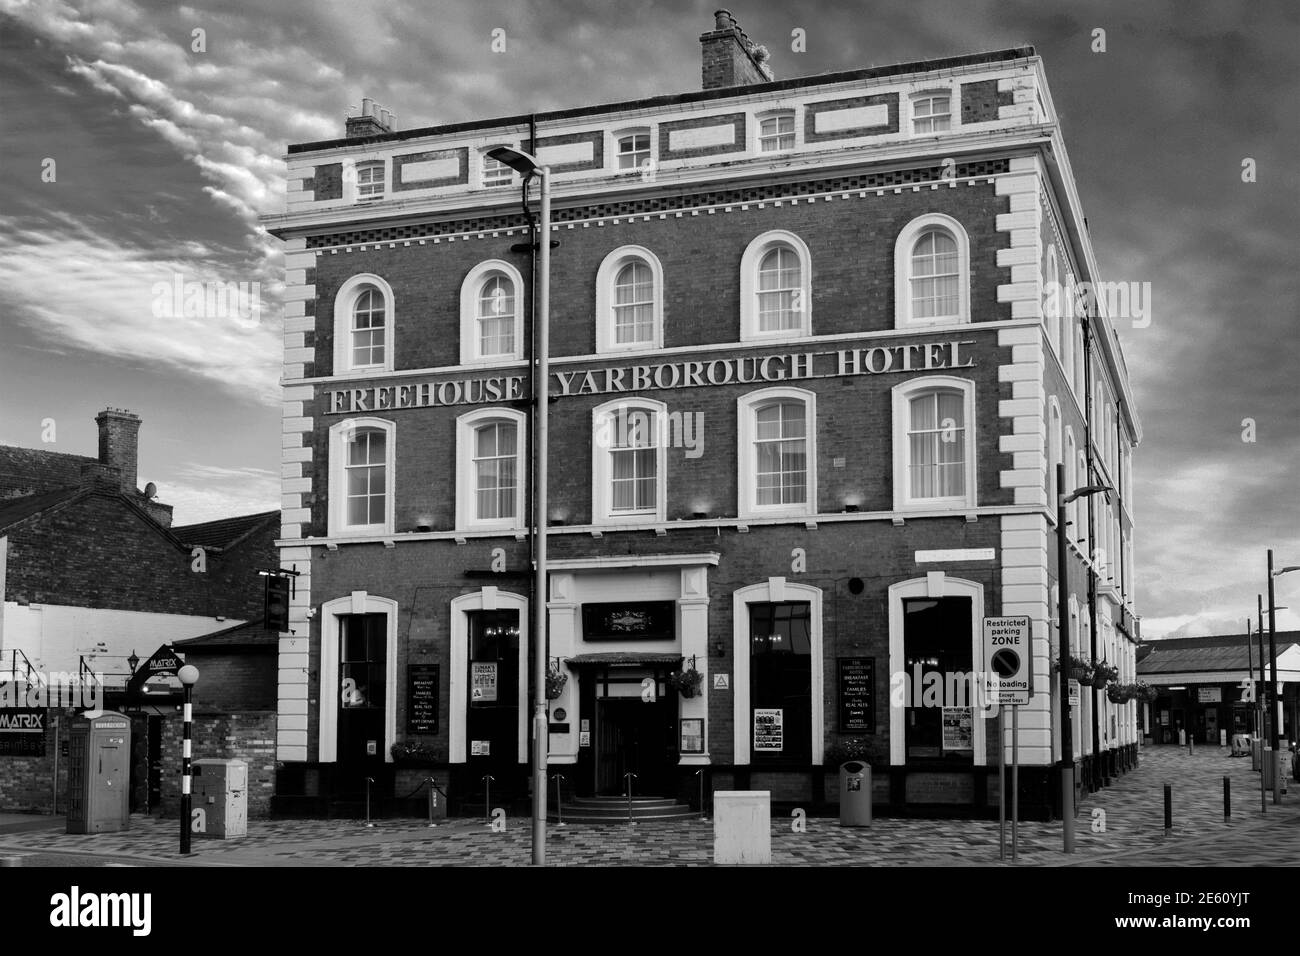 The Yarborough Hotel, ein Weatherspoons Pub und Hotel, Grimsby Town, Lincolnshire, England Stockfoto